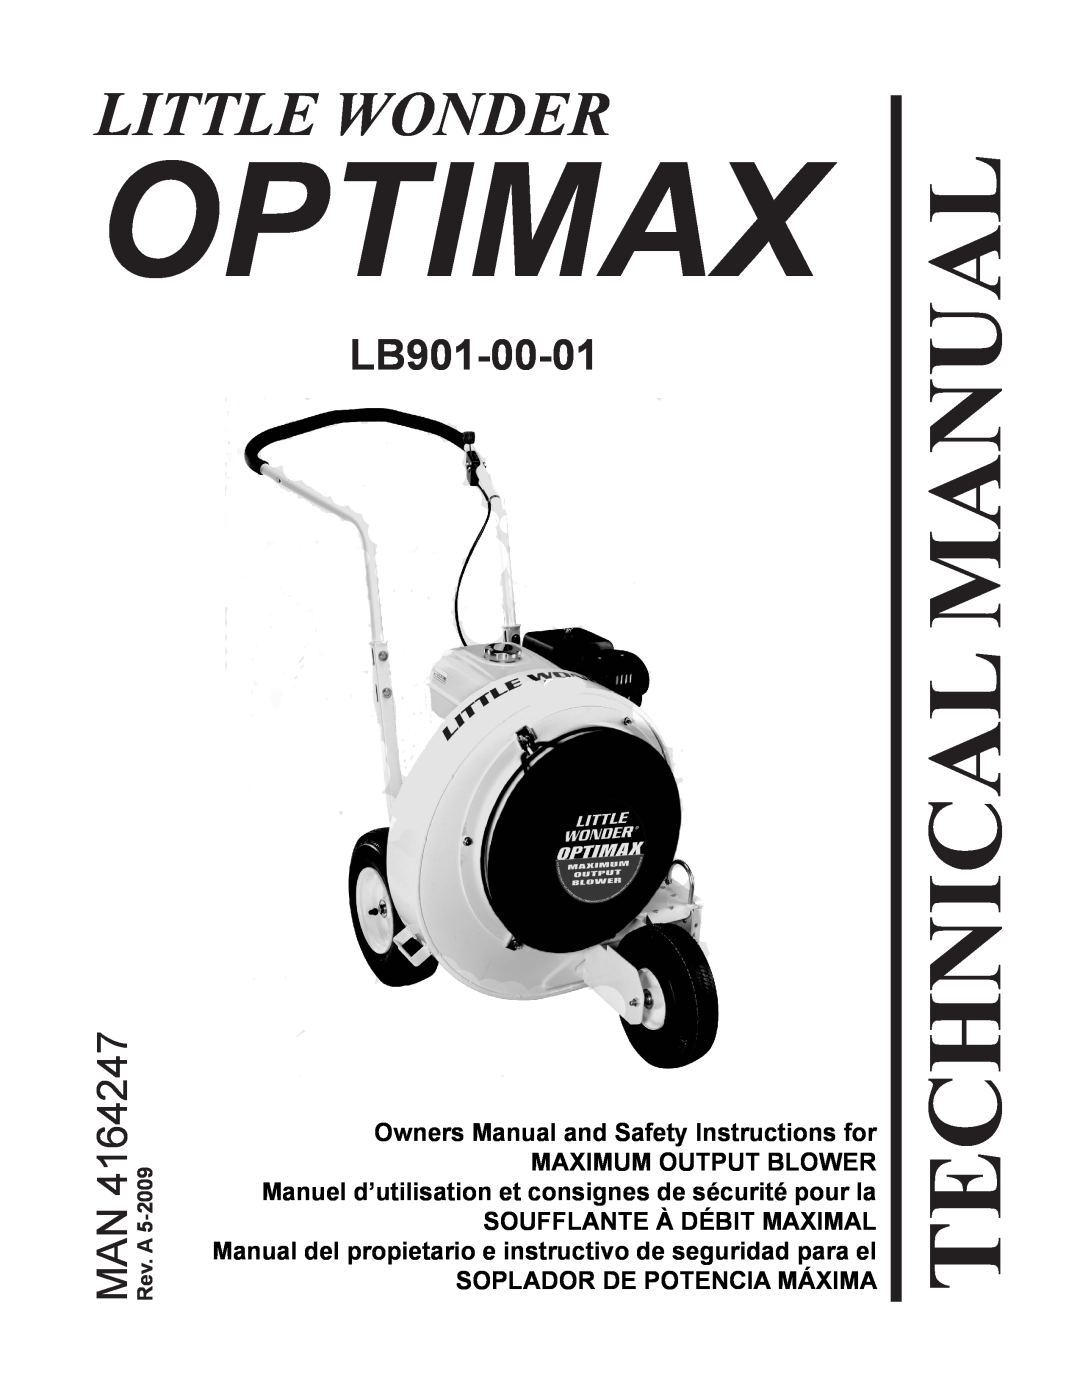 Little Wonder LB901-00-01 Optimax, Soufflante À Débit Maximal, Soplador De Potencia Máxima, Technical Manual 